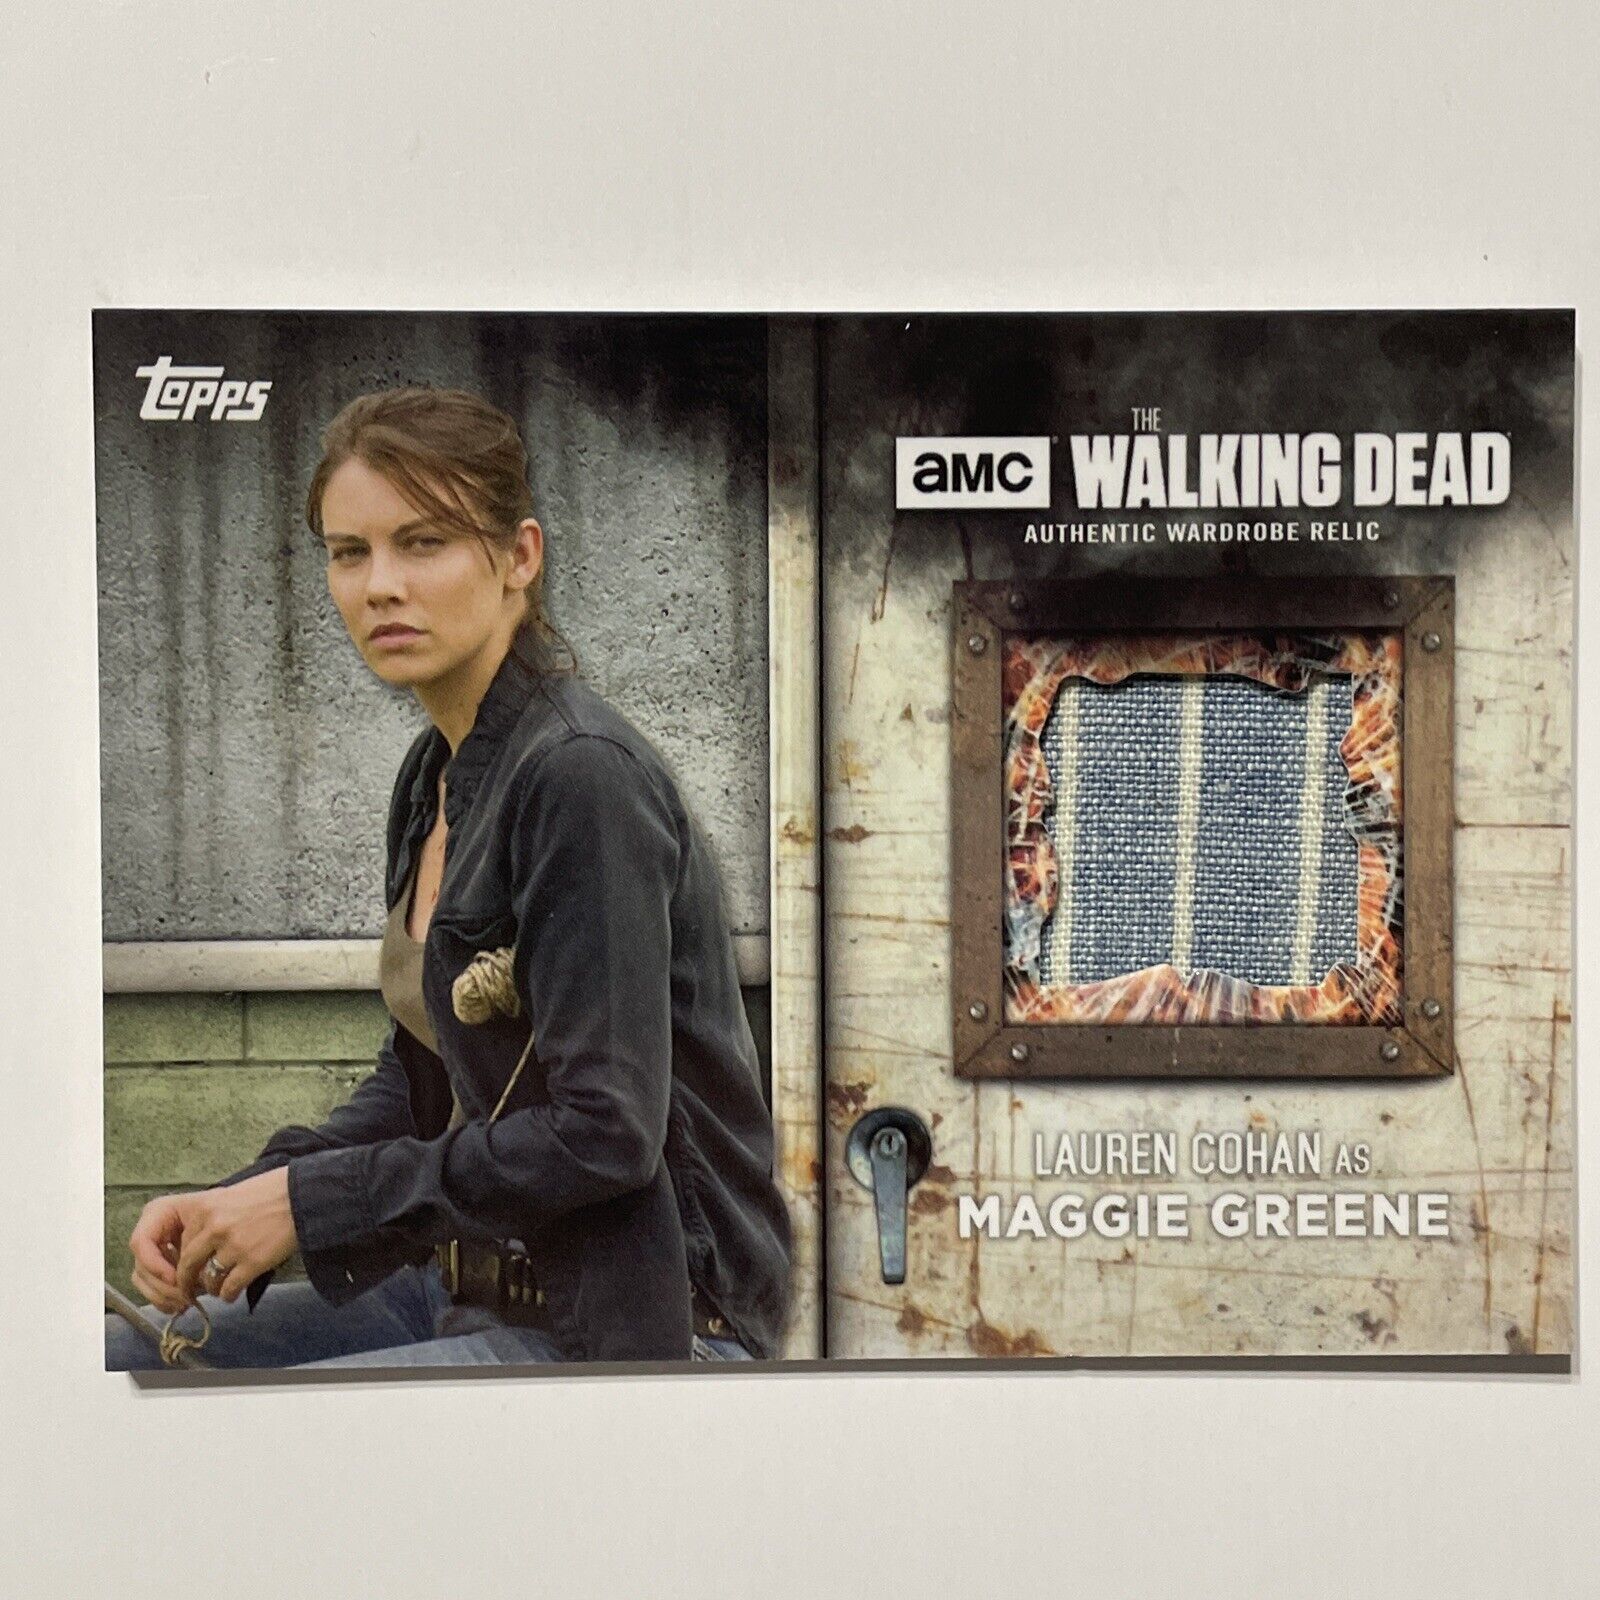 2017 Walking Dead Topps Maggie Greene Authentic Wardrobe Relic Card 